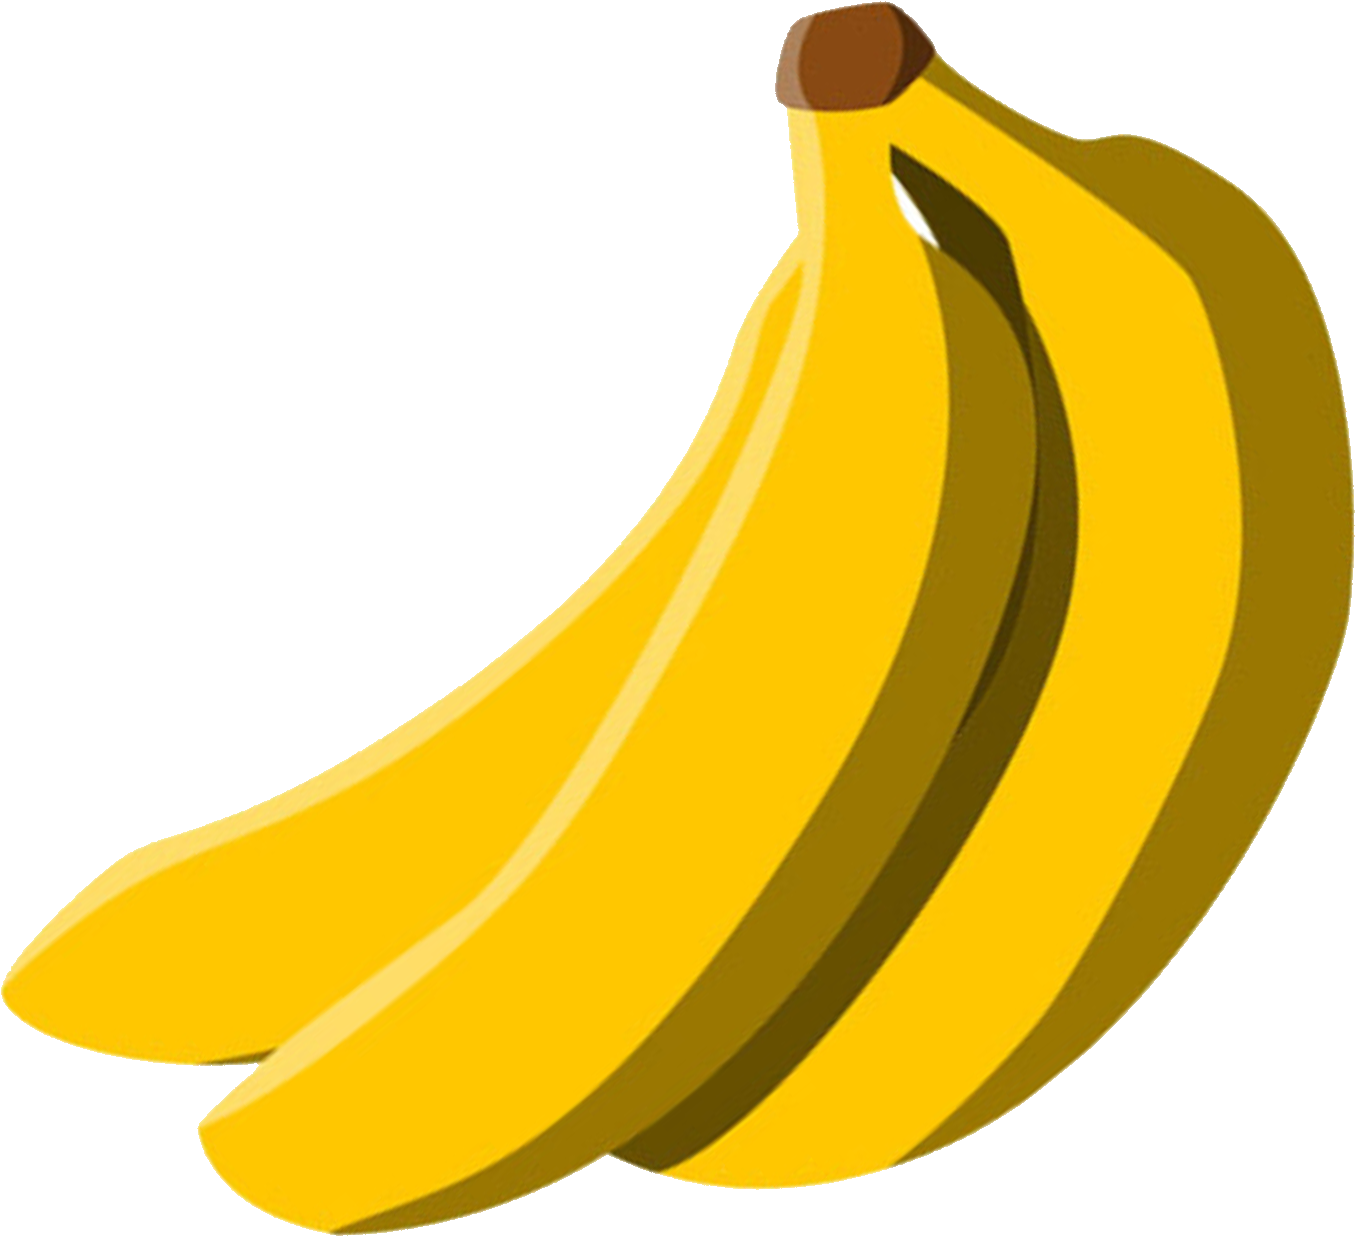 Juggling Bananas - Juggling Bananas (1500x1263)